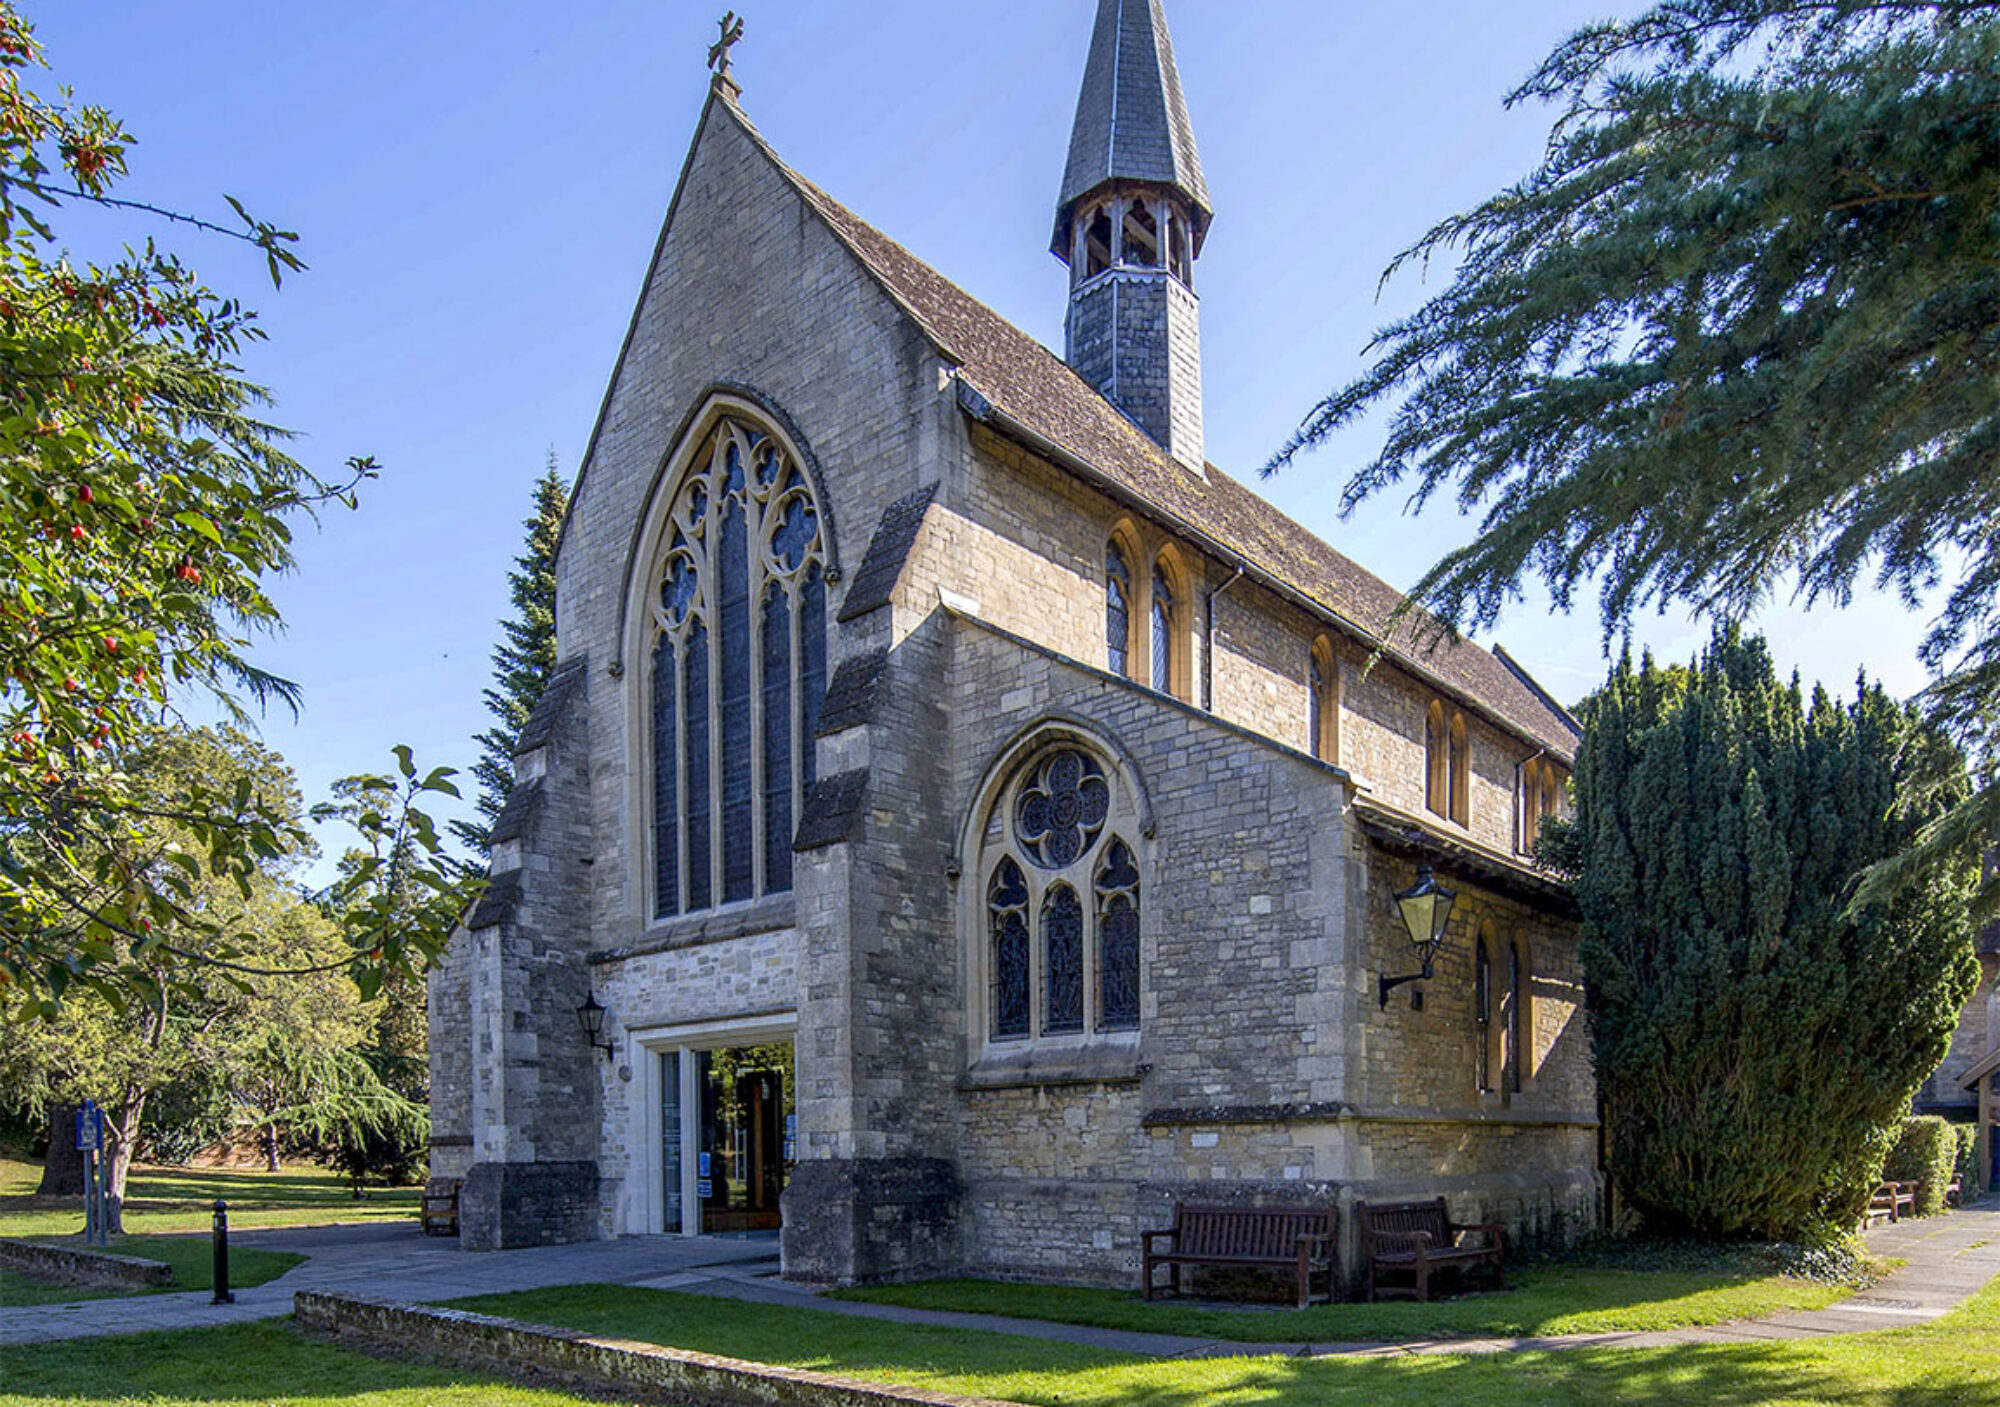 The Parish of Boxmoor